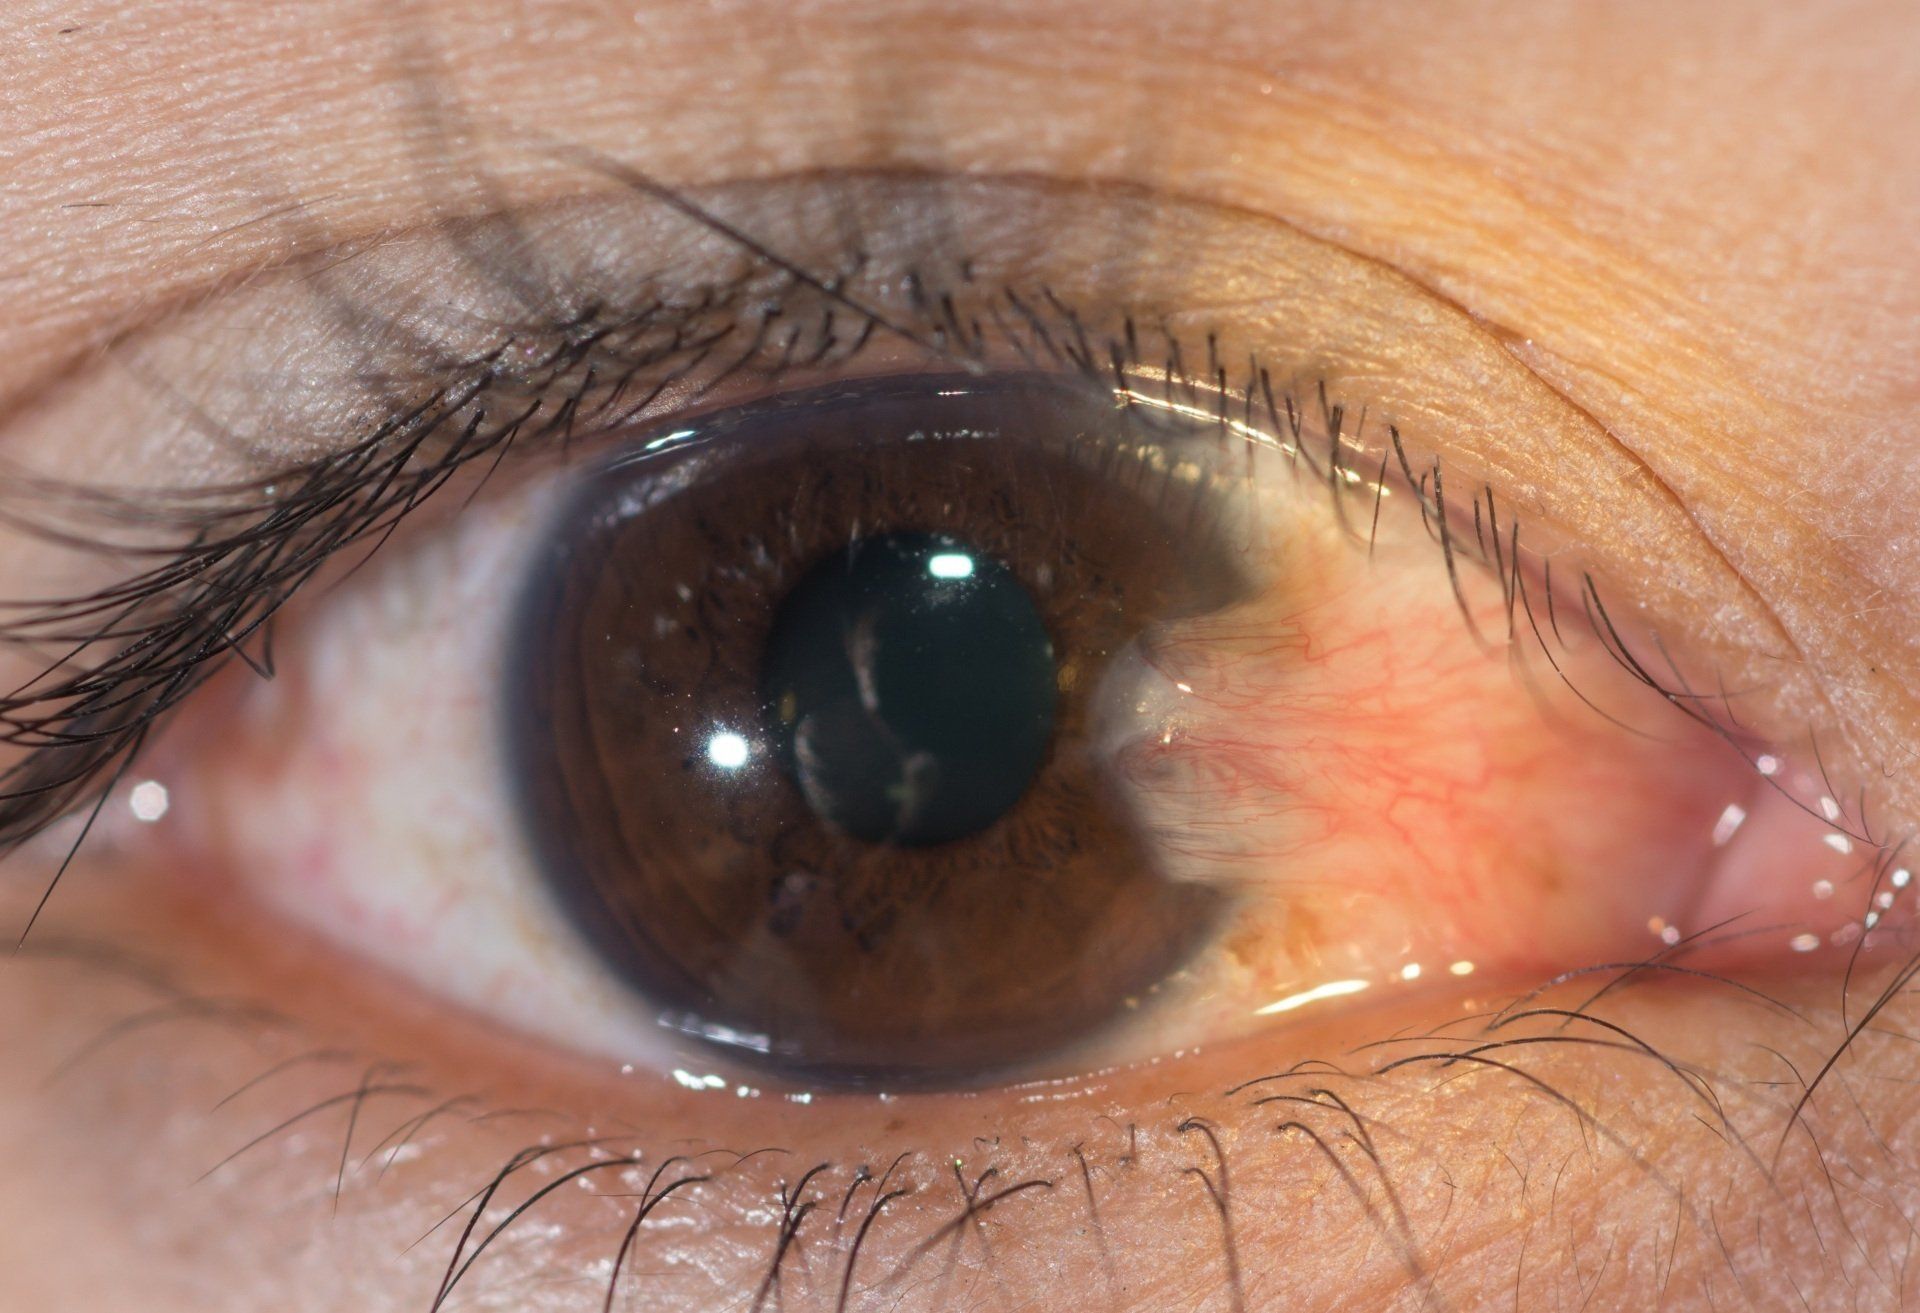 Pterygium in right eye